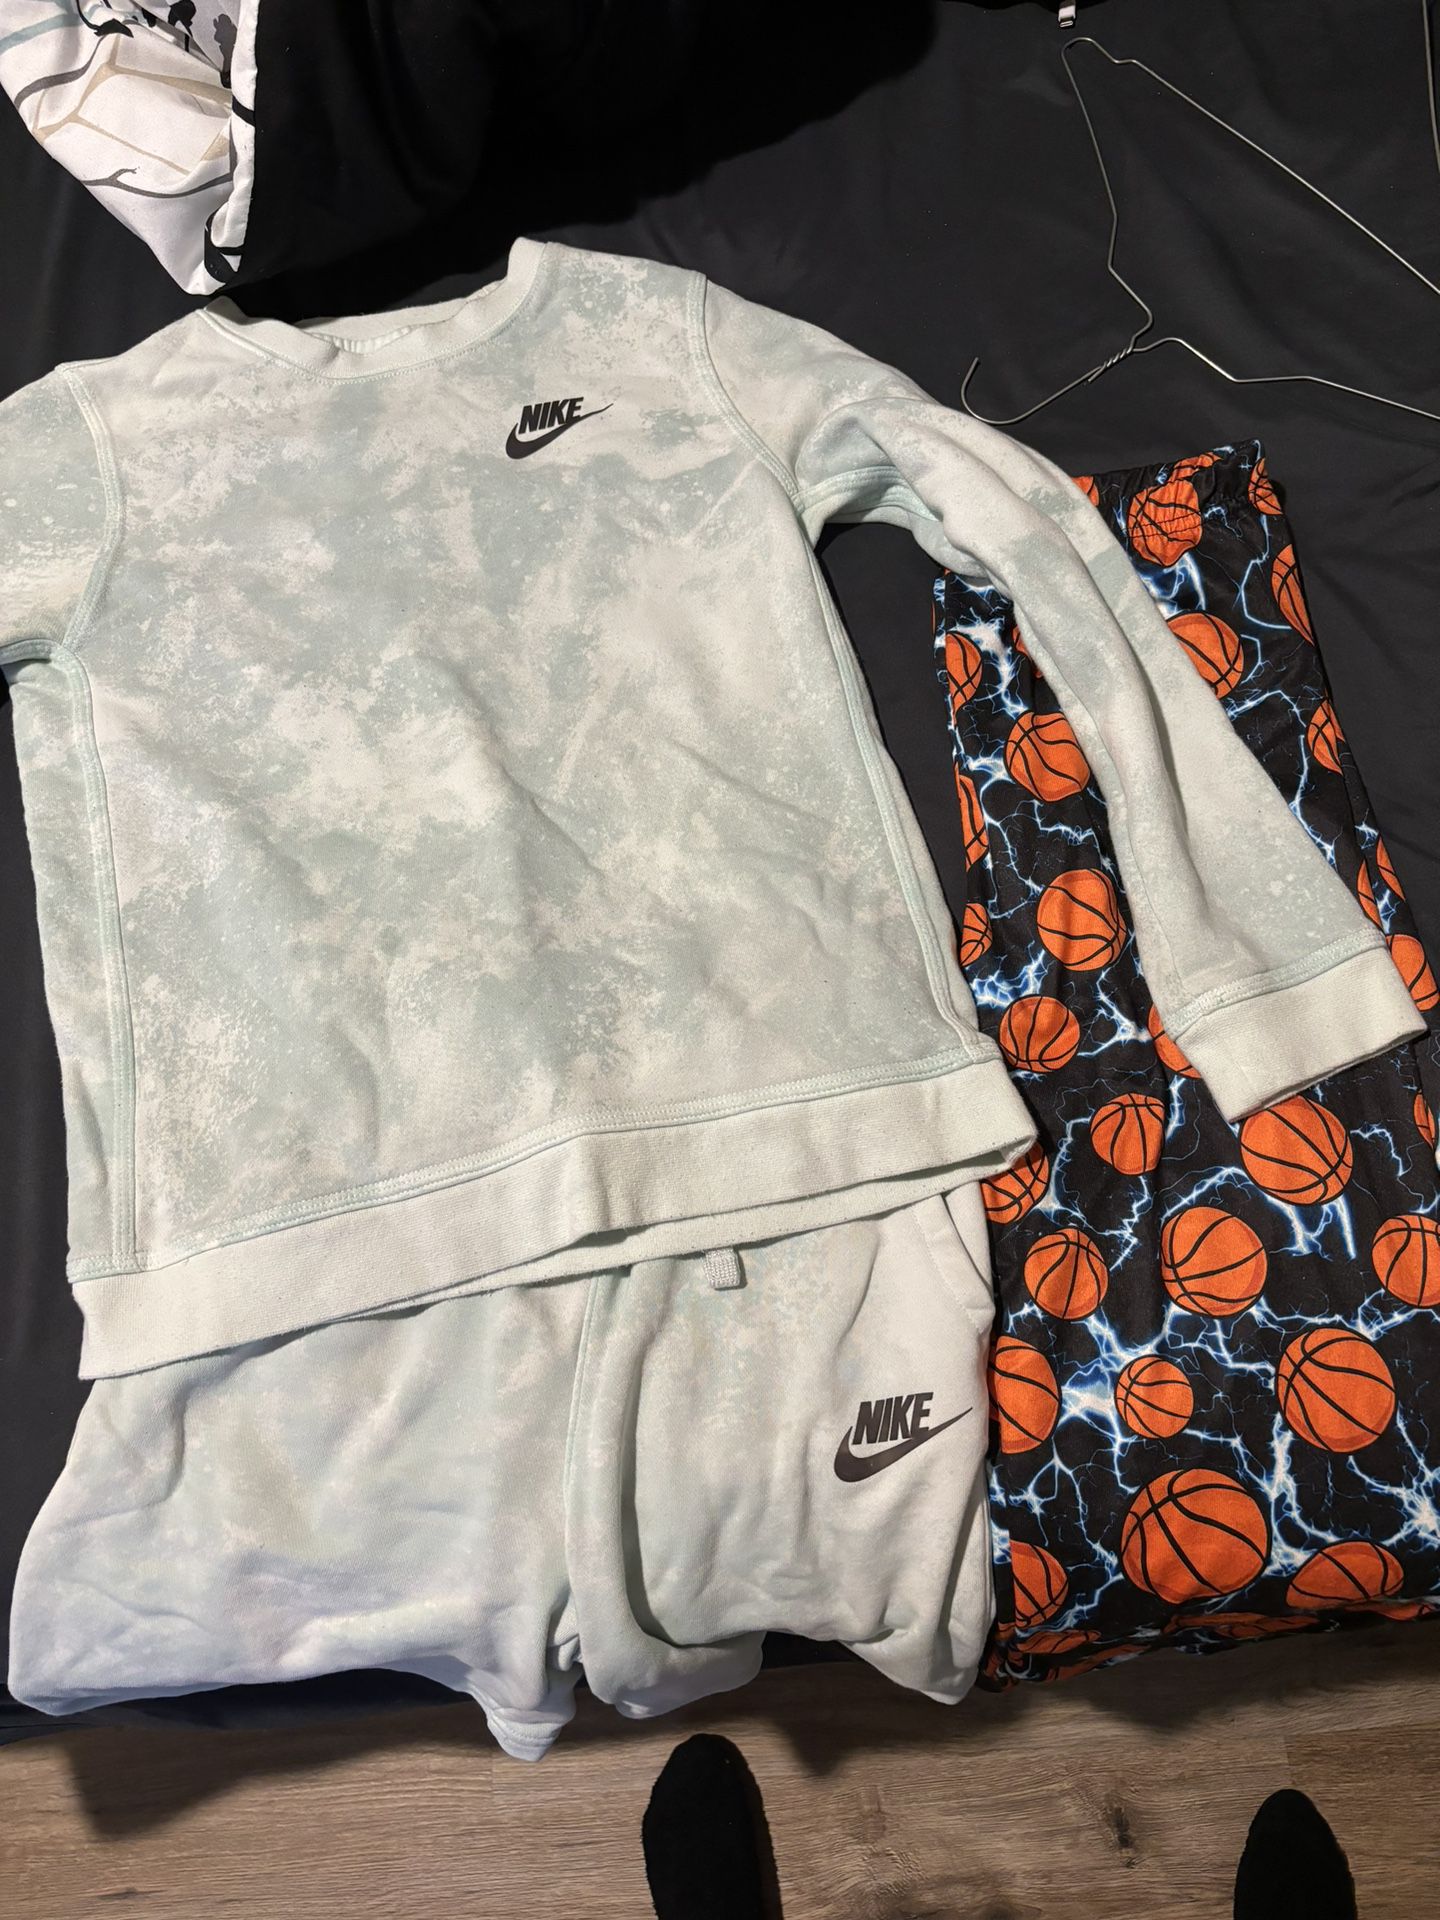 L Nike Sweatshirt & Shorts (In kids) & Basketball Pajama pants (size 10-12)